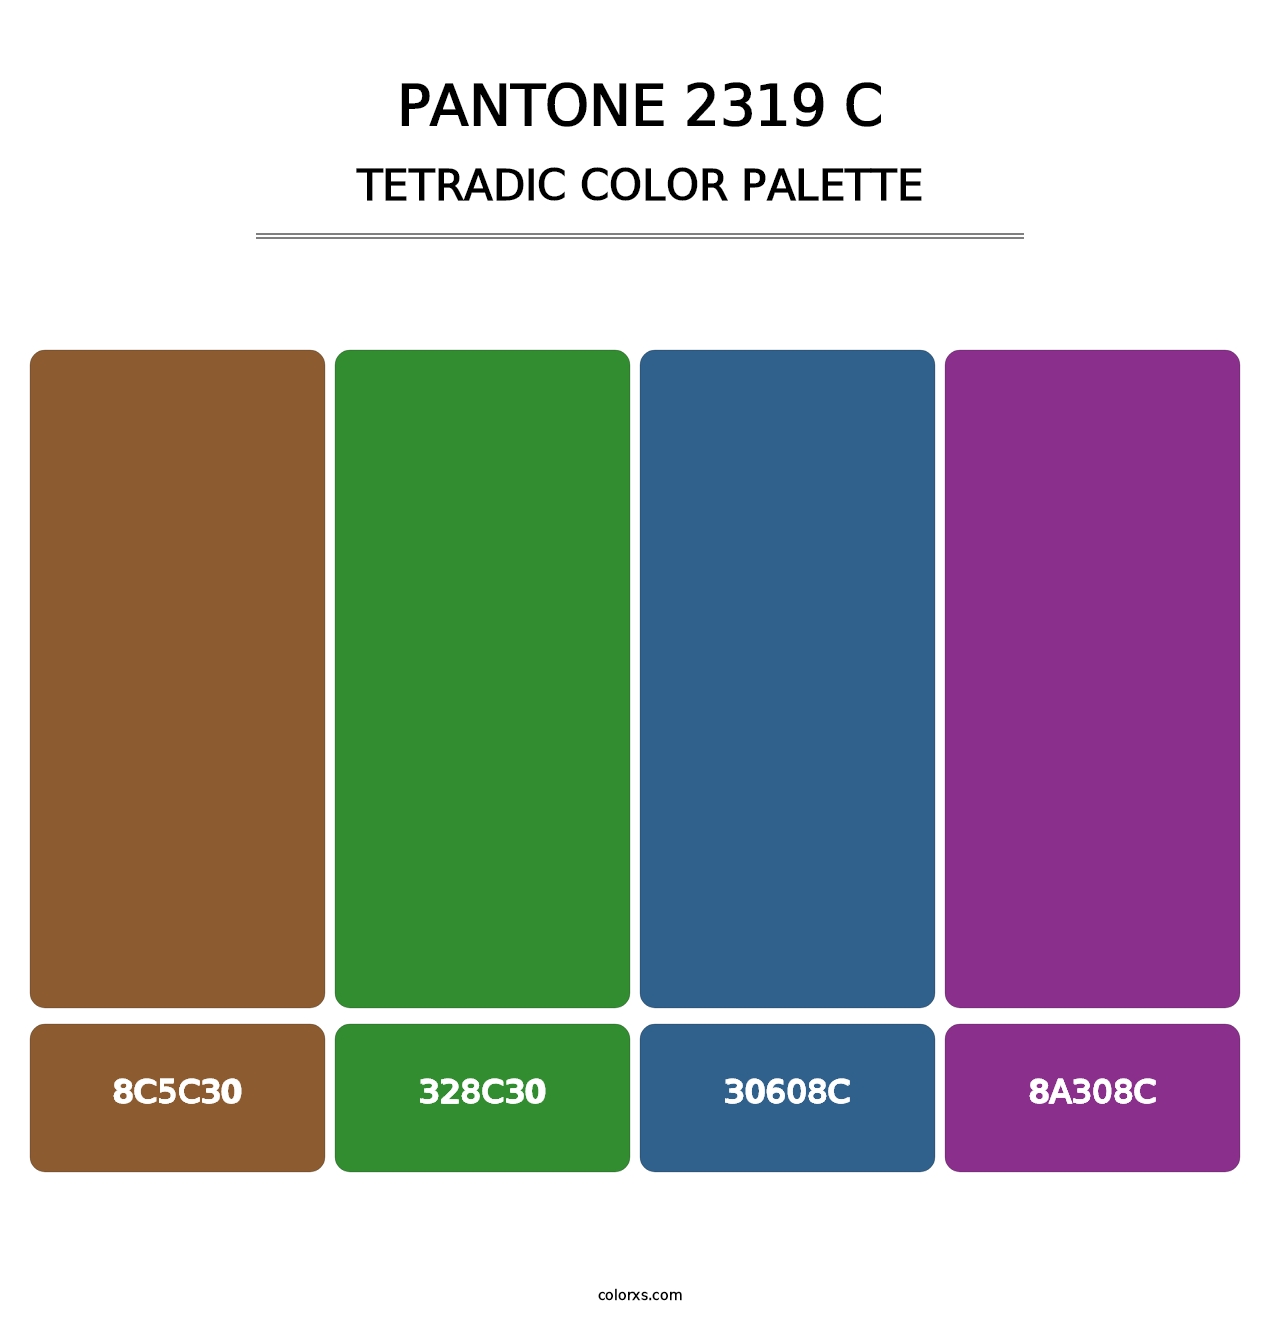 PANTONE 2319 C - Tetradic Color Palette